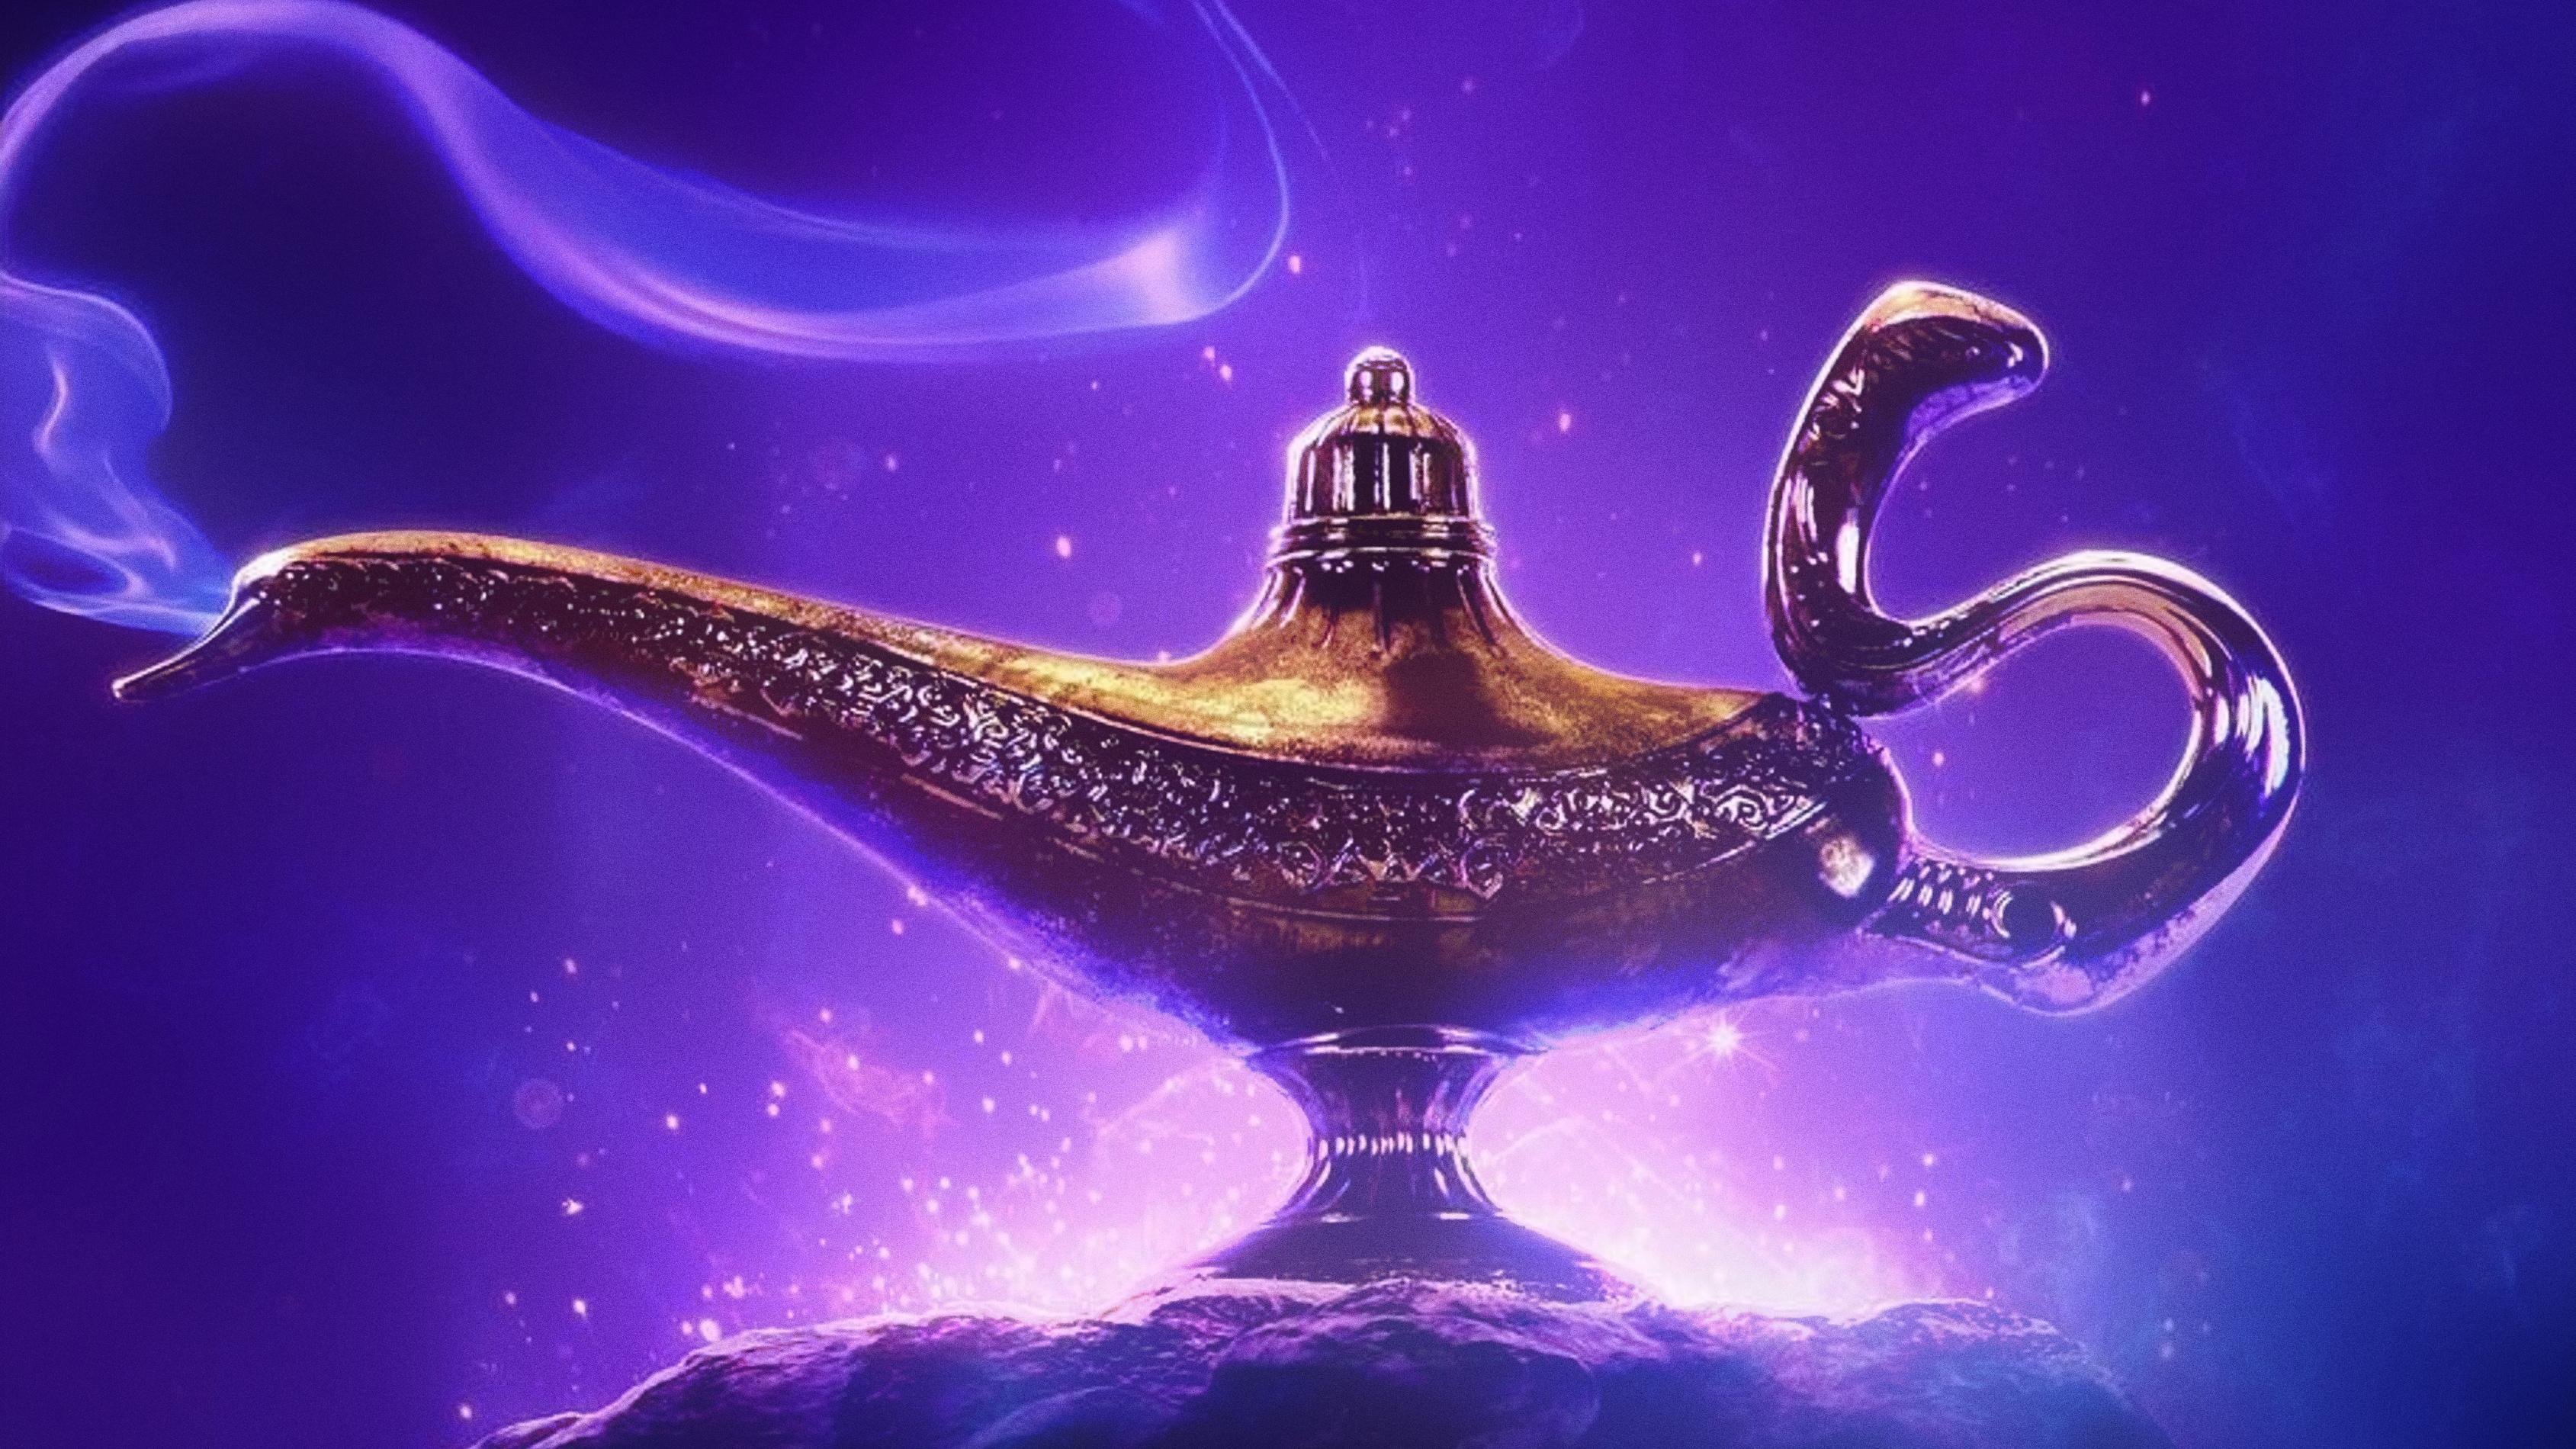 Aladdin (2019) image Aladdin HD wallpaper and background photo